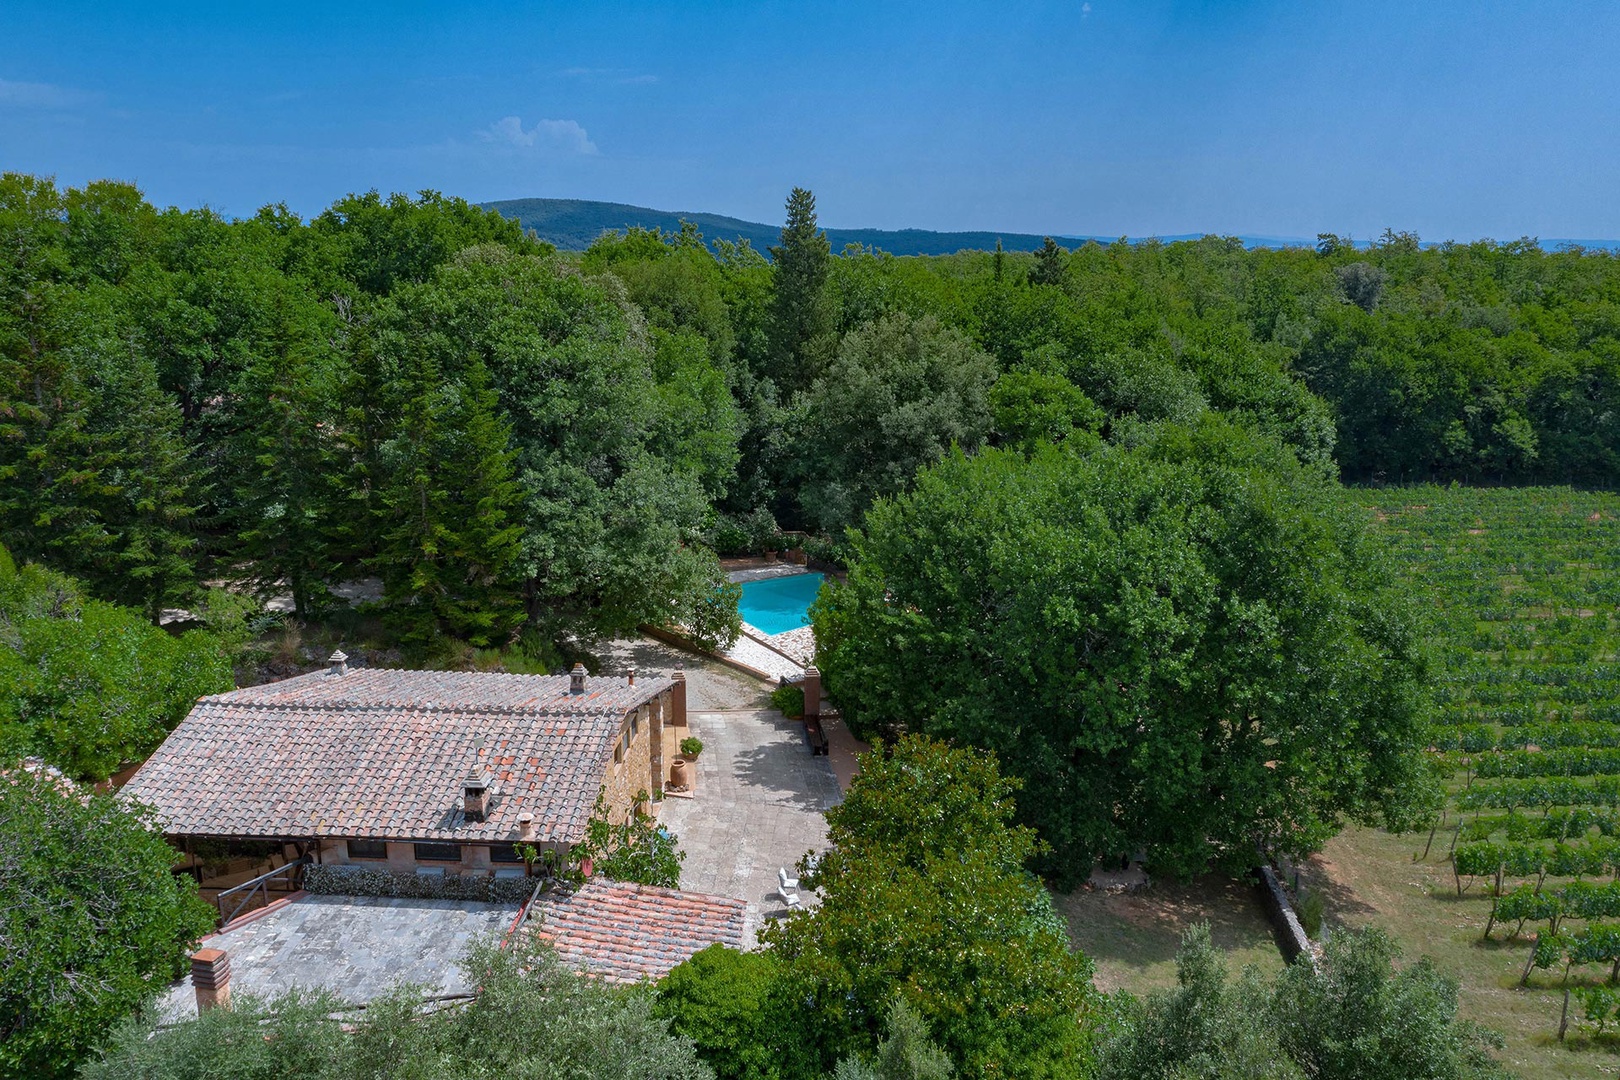 Elegant Villa tucked away in the hills of Tuscany.